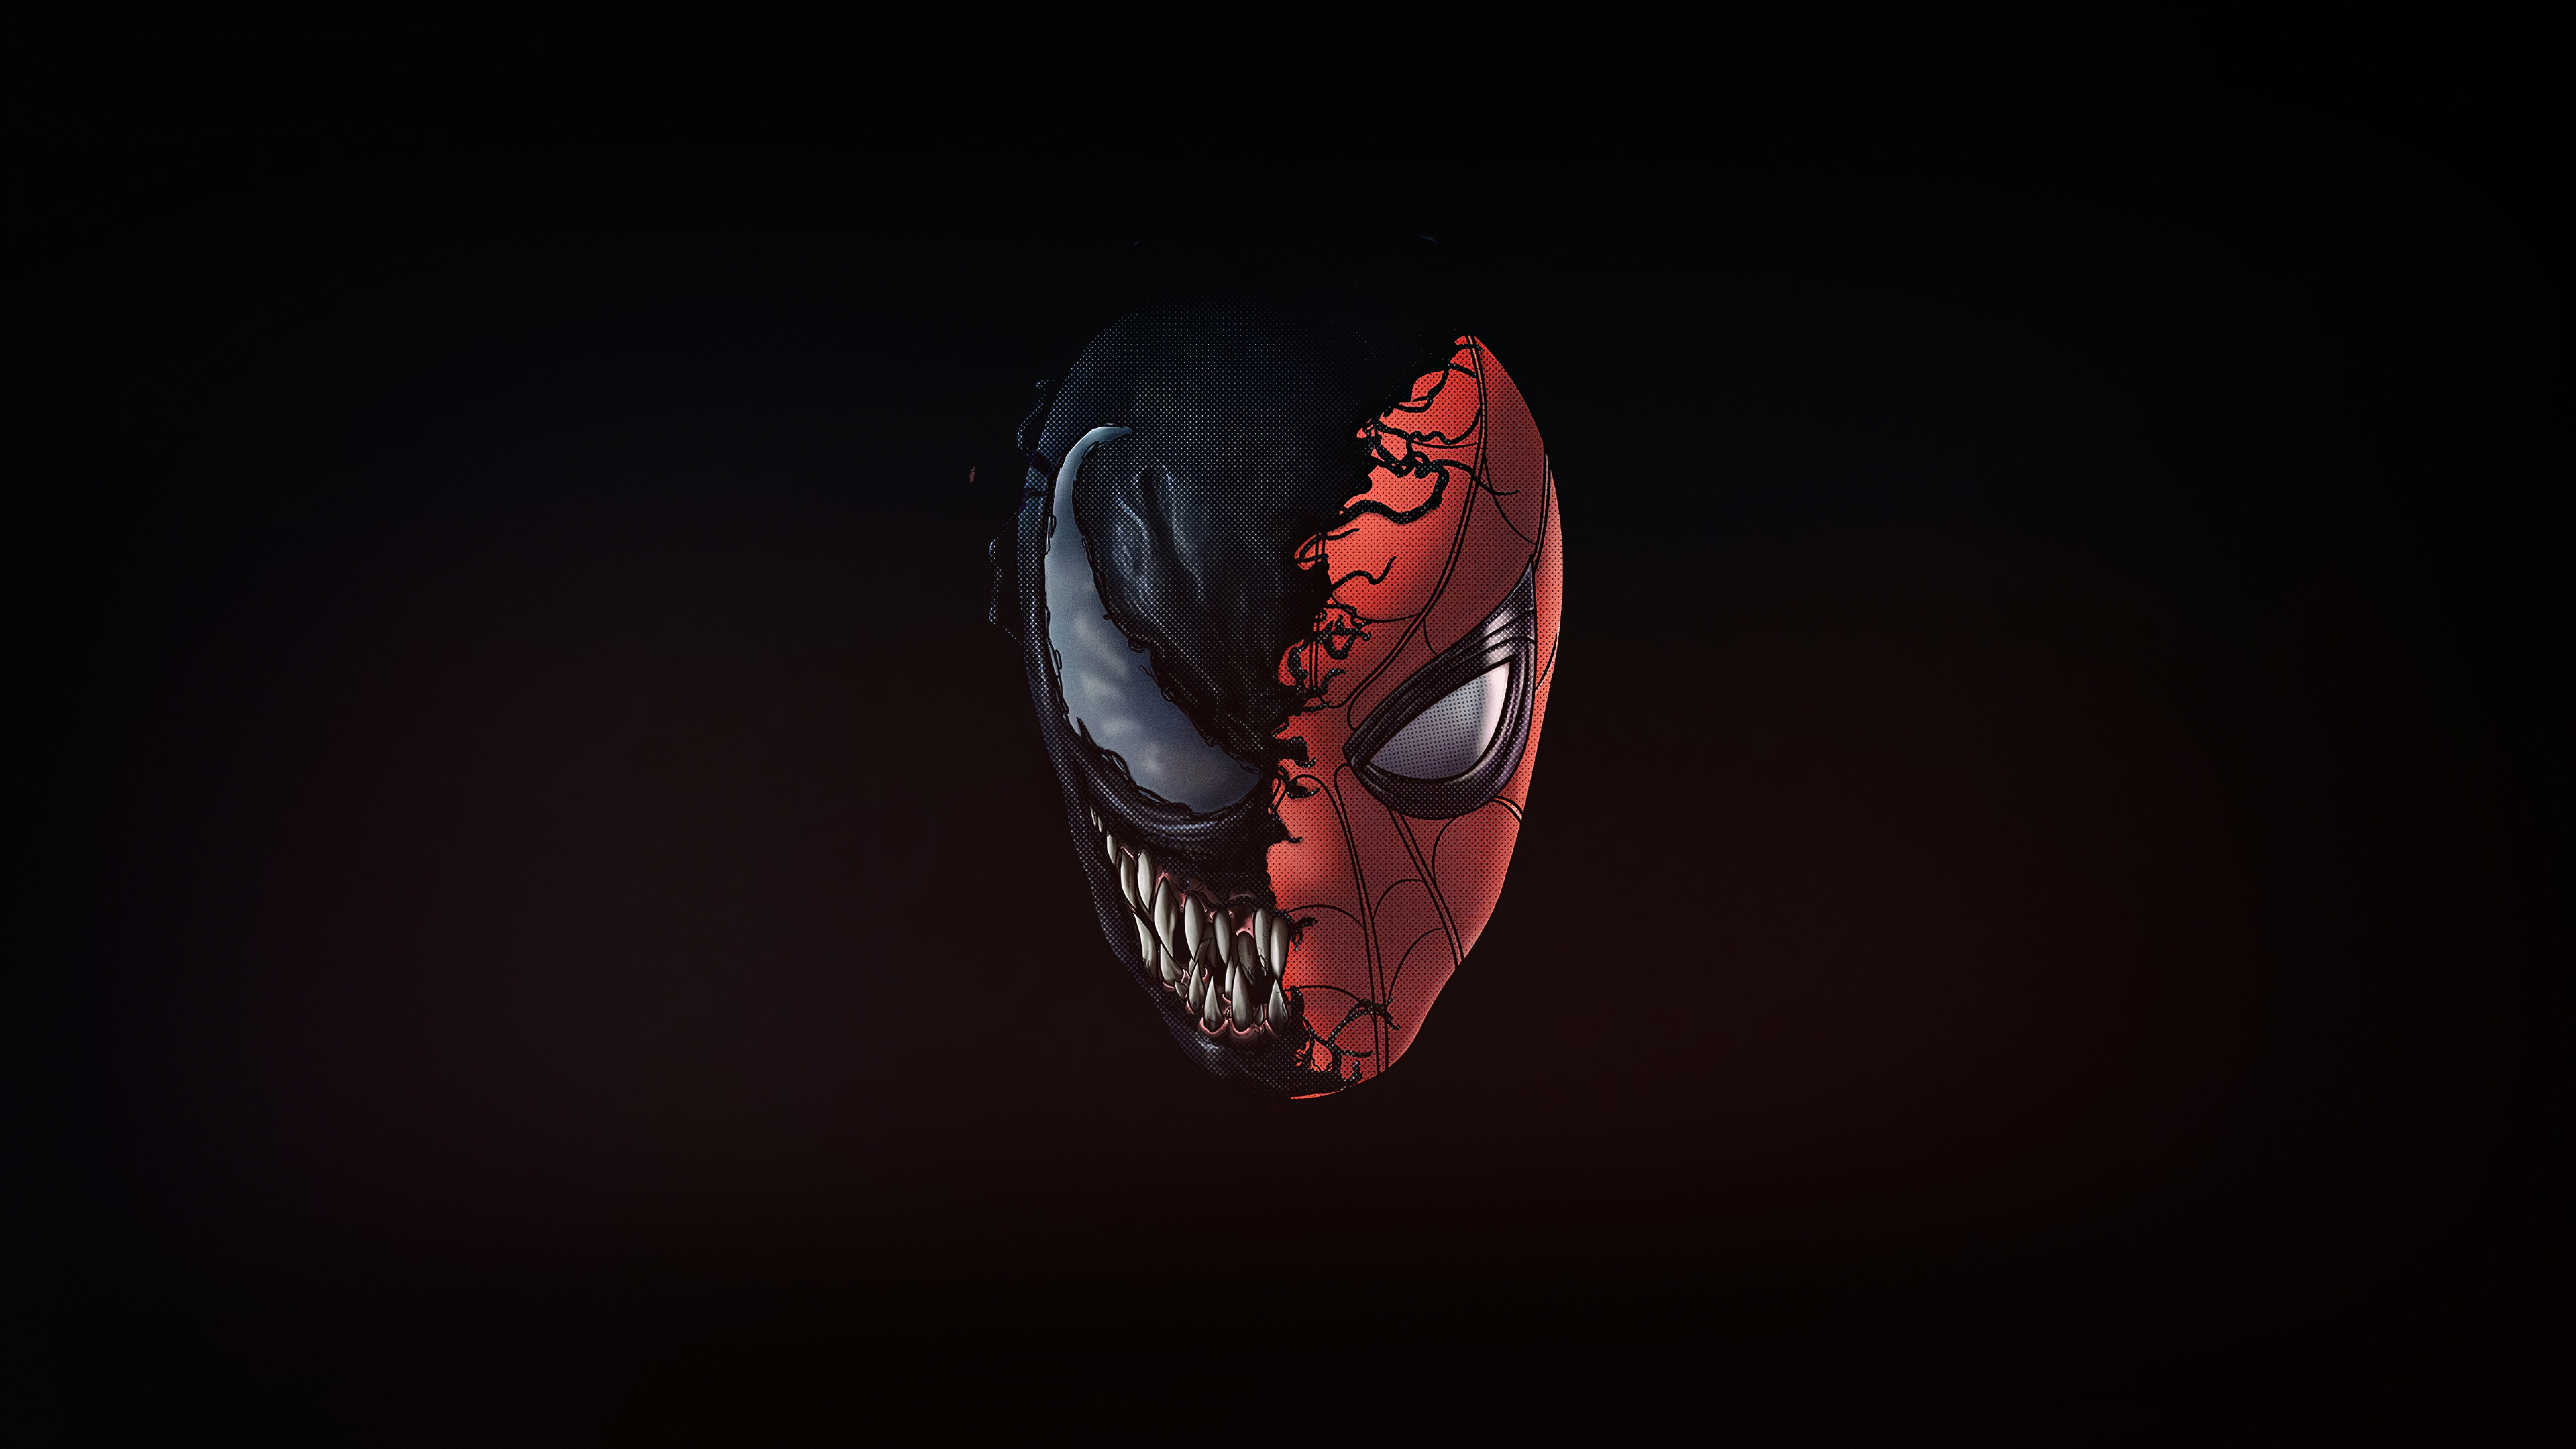 7680x4320 Venom x Spiderman 4K 8K Wallpaper, HD Superheroes 4K Wallpapers,  Images, Photos and Background - Wallpapers Den